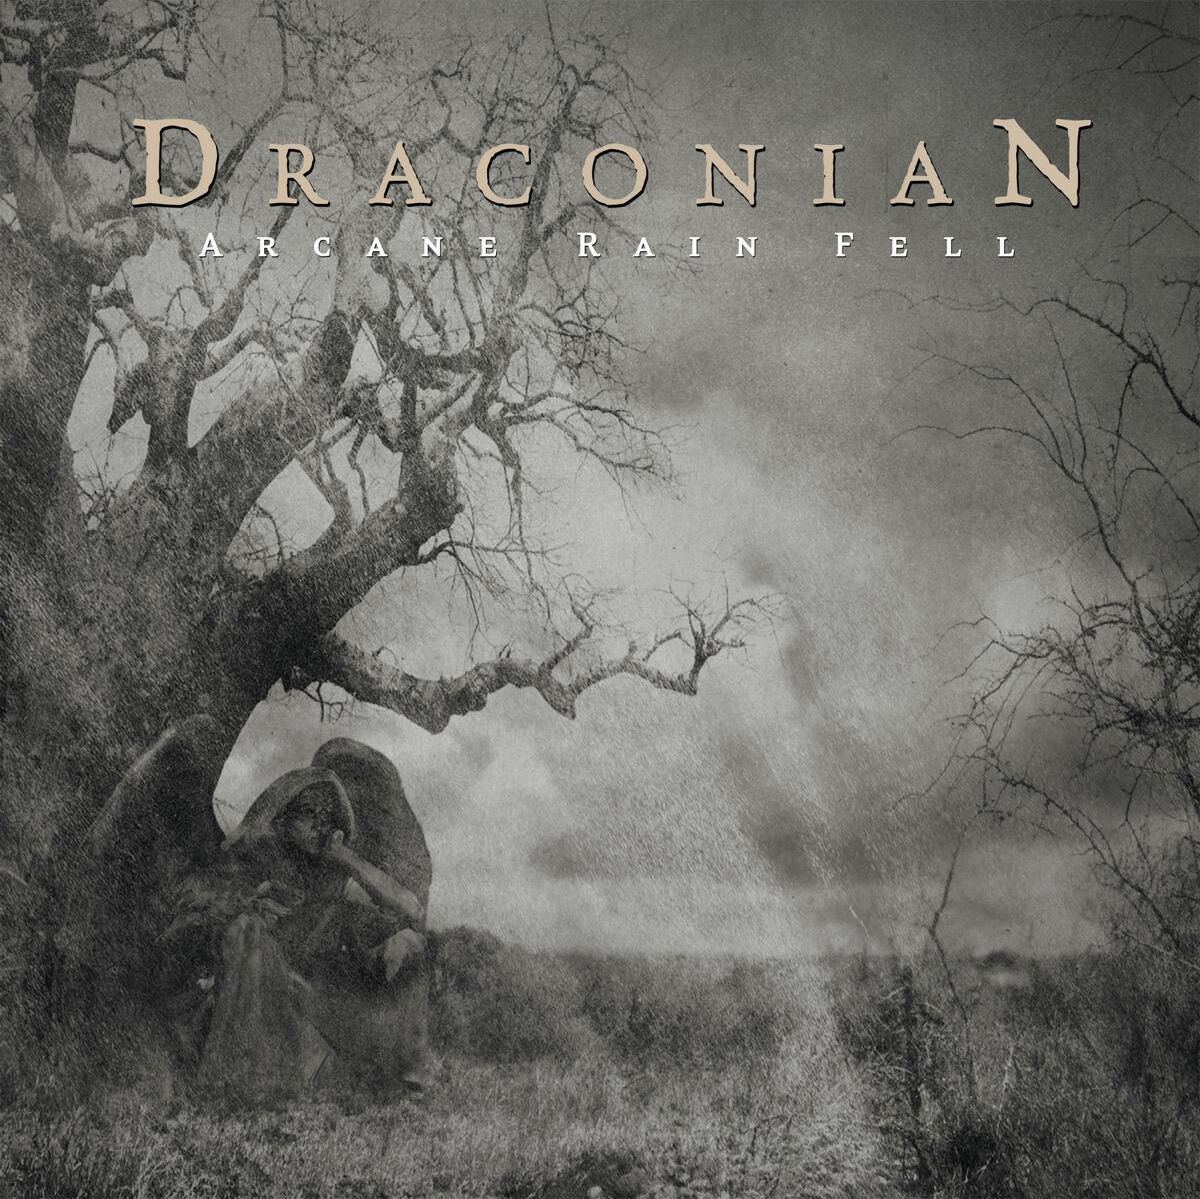 DRACONIAN - Arcane Rain Fell [CD]